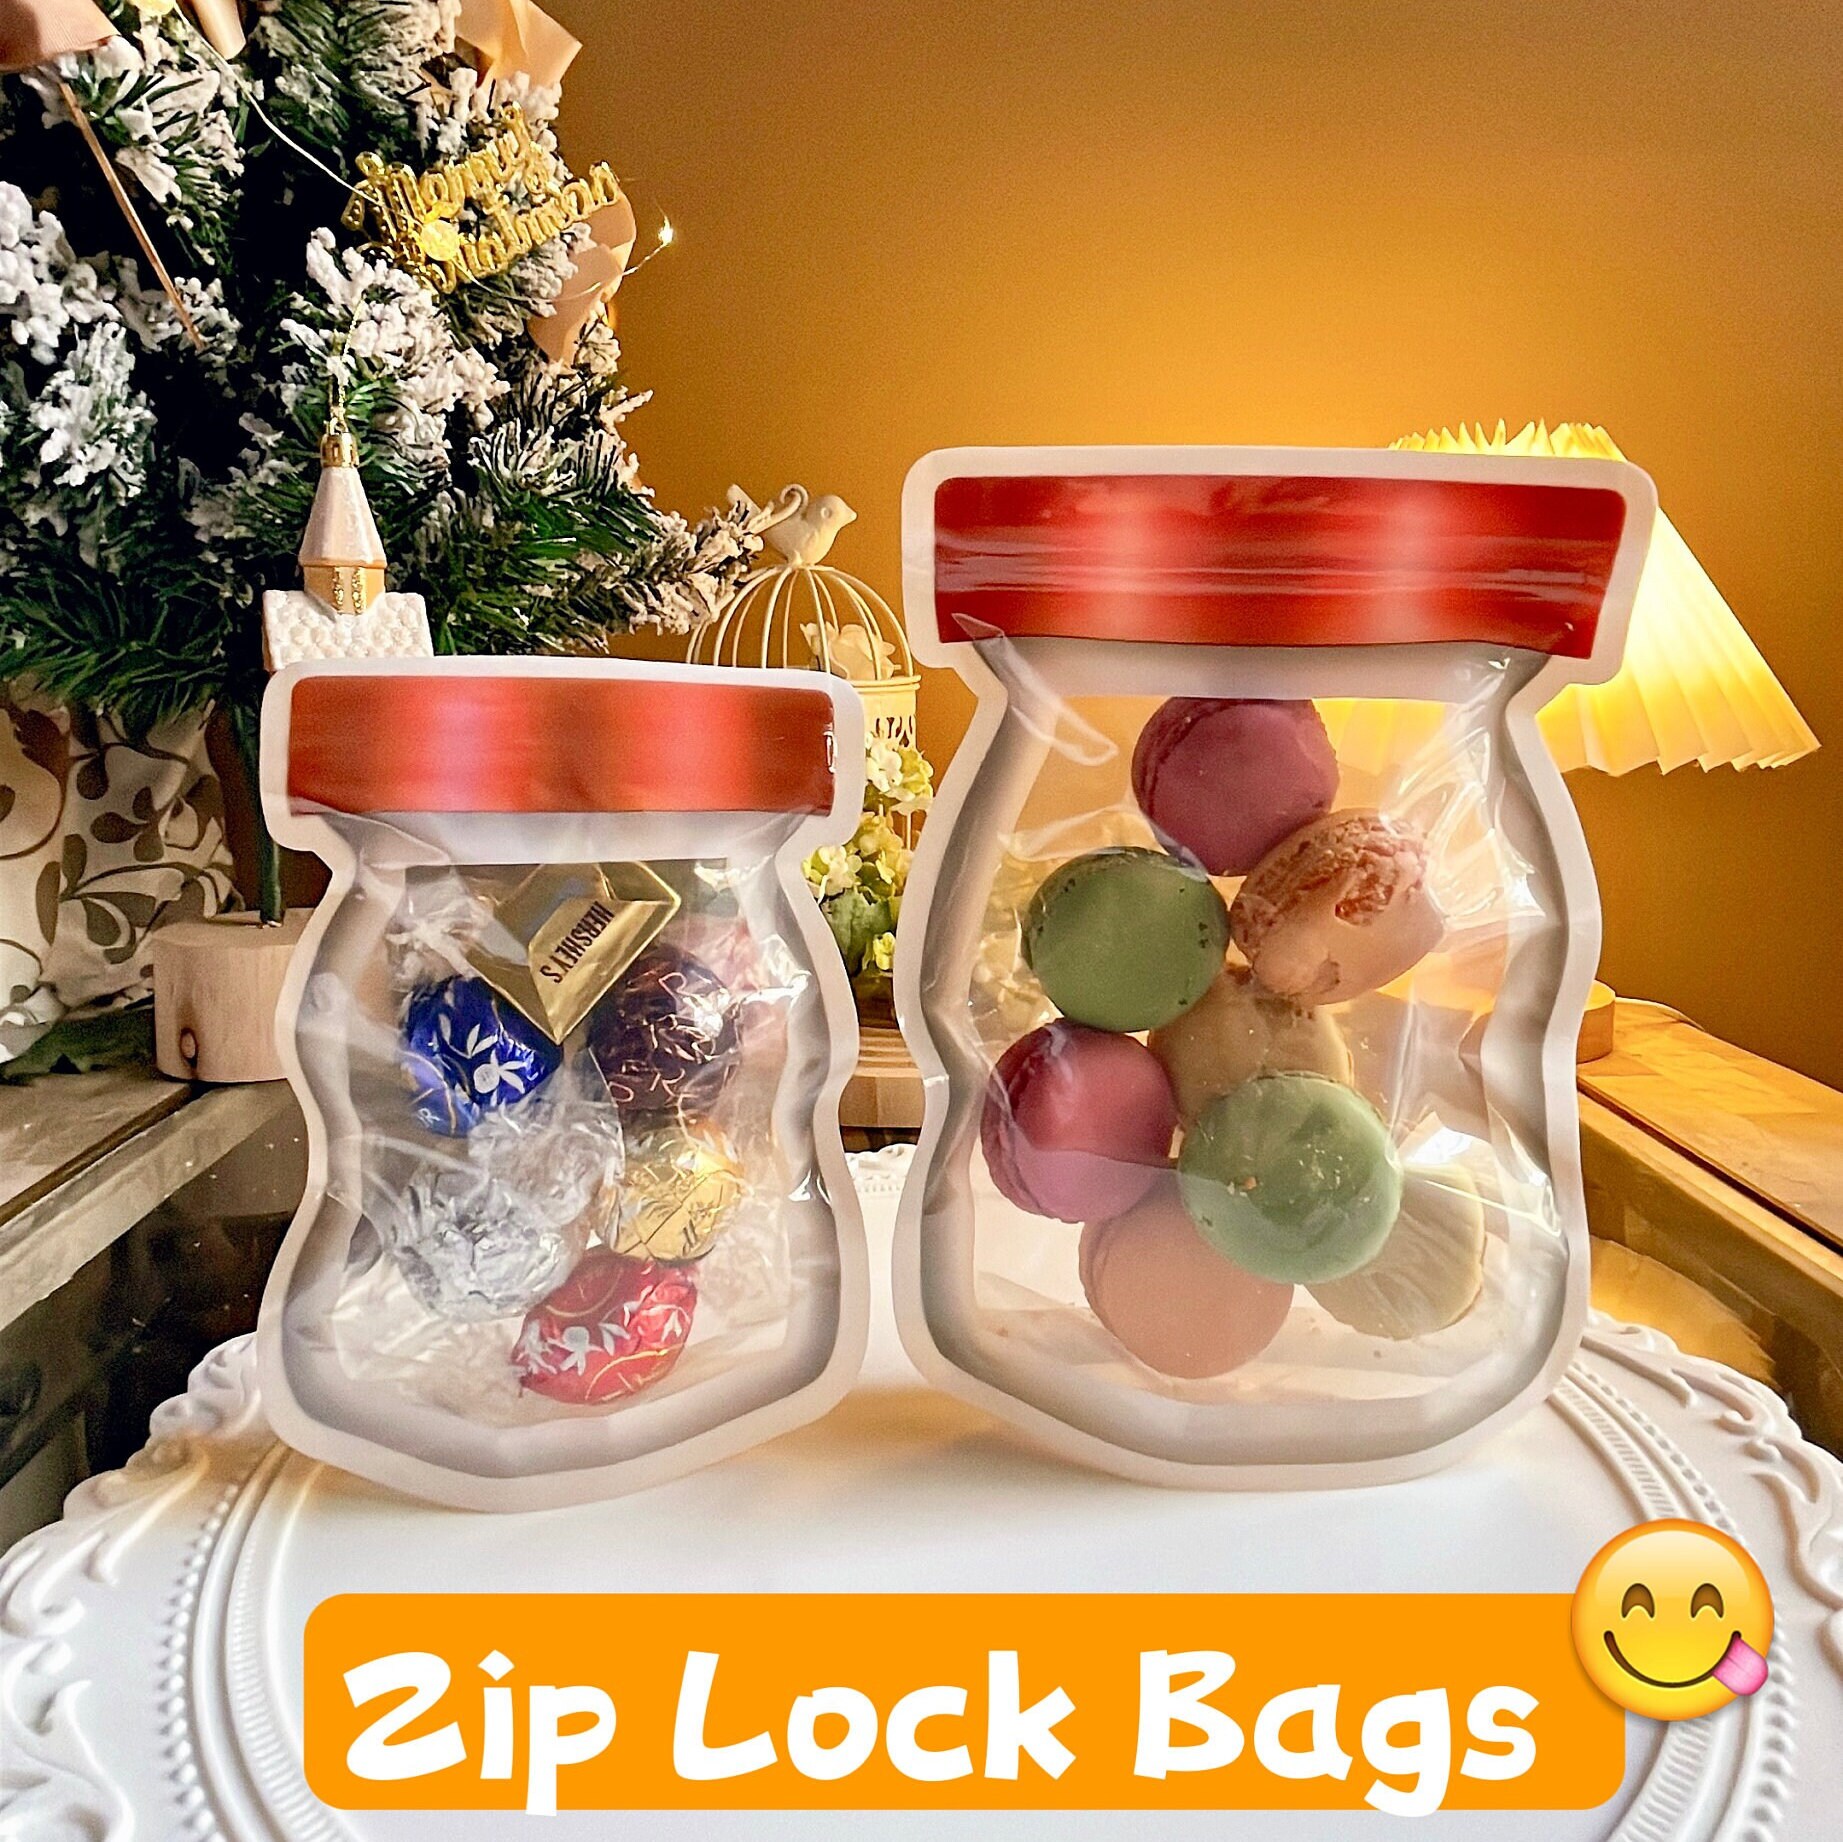 Rrjqw Mason Jar Zipper Bags,Food Storage Snack Sandwich Ziplock Bags,Reusable Airtight Seal Food Storage Bags,Leakproof Food Saver Bags for Travel Cam